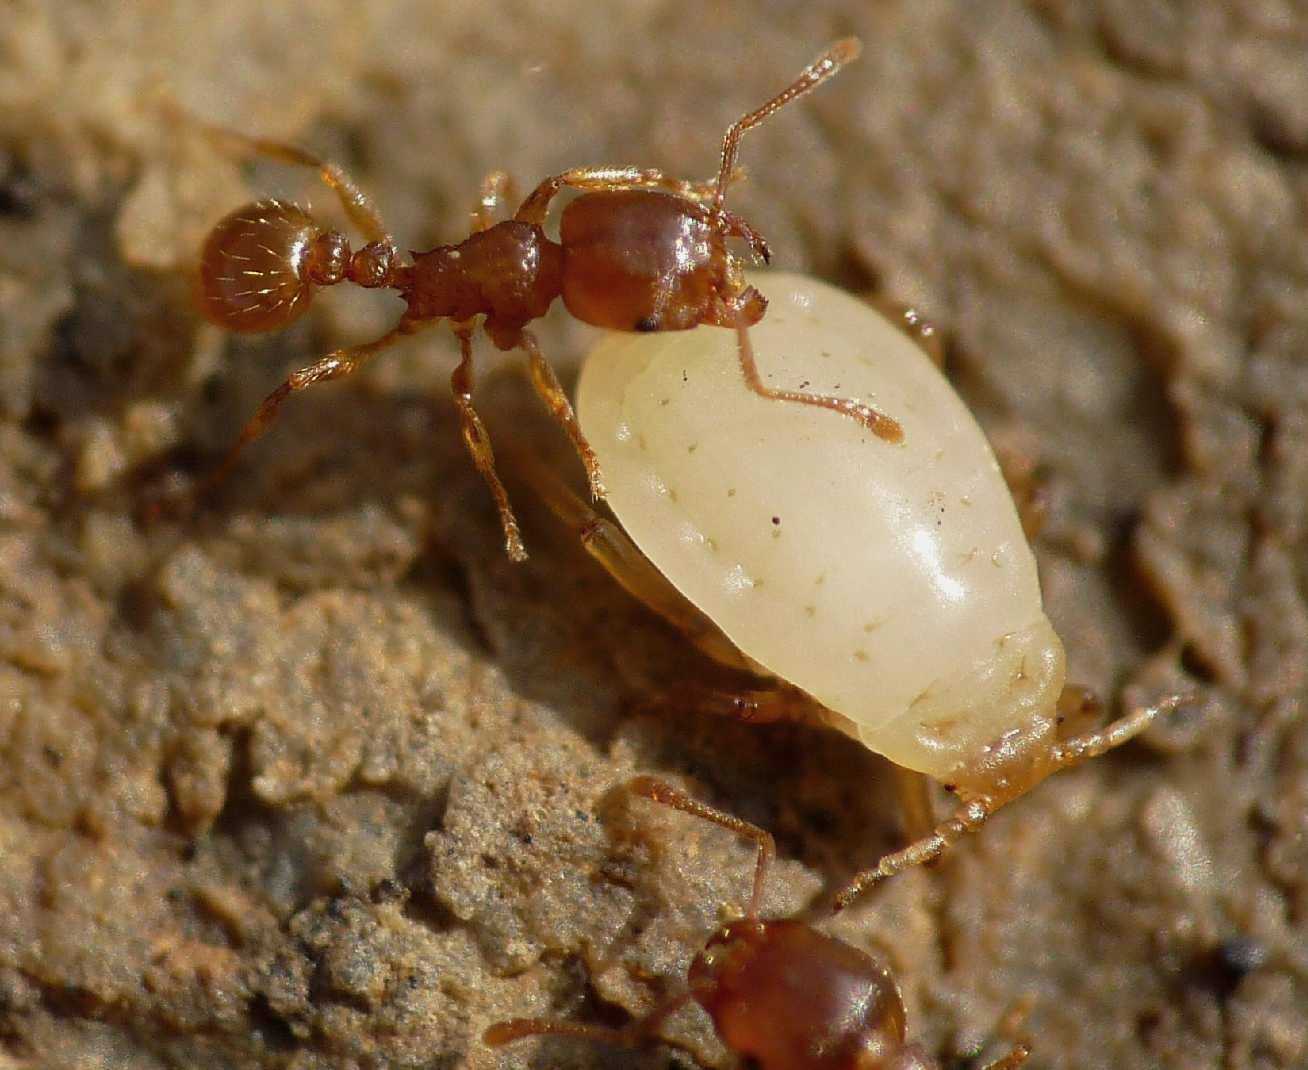 Aphididae ospiti delle formiche Tetramorium : Paracletus cimiciformis